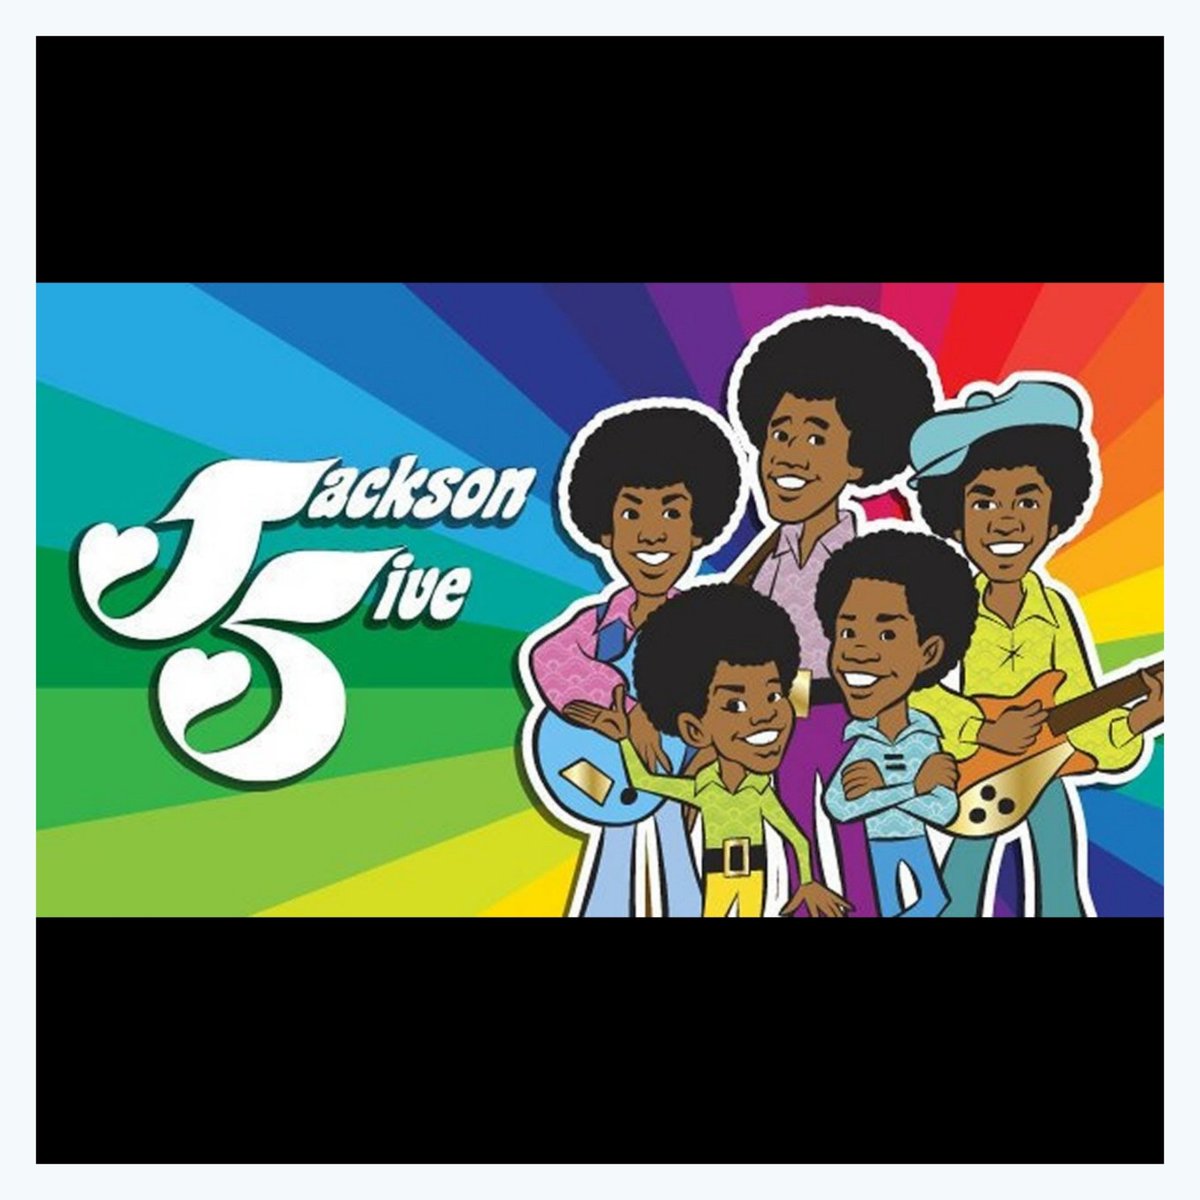 Hoje viajamos aos anos 70 com: Jackson Five (1971) link:vm.tiktok.com/ZMjngLTG9/
#jacksonfive #michaeljackson #anos70 #manchete #tvmanchete #desenhos #animation #music #música 
#cabinemusical #cabinedotempo #clipe #mtv #love